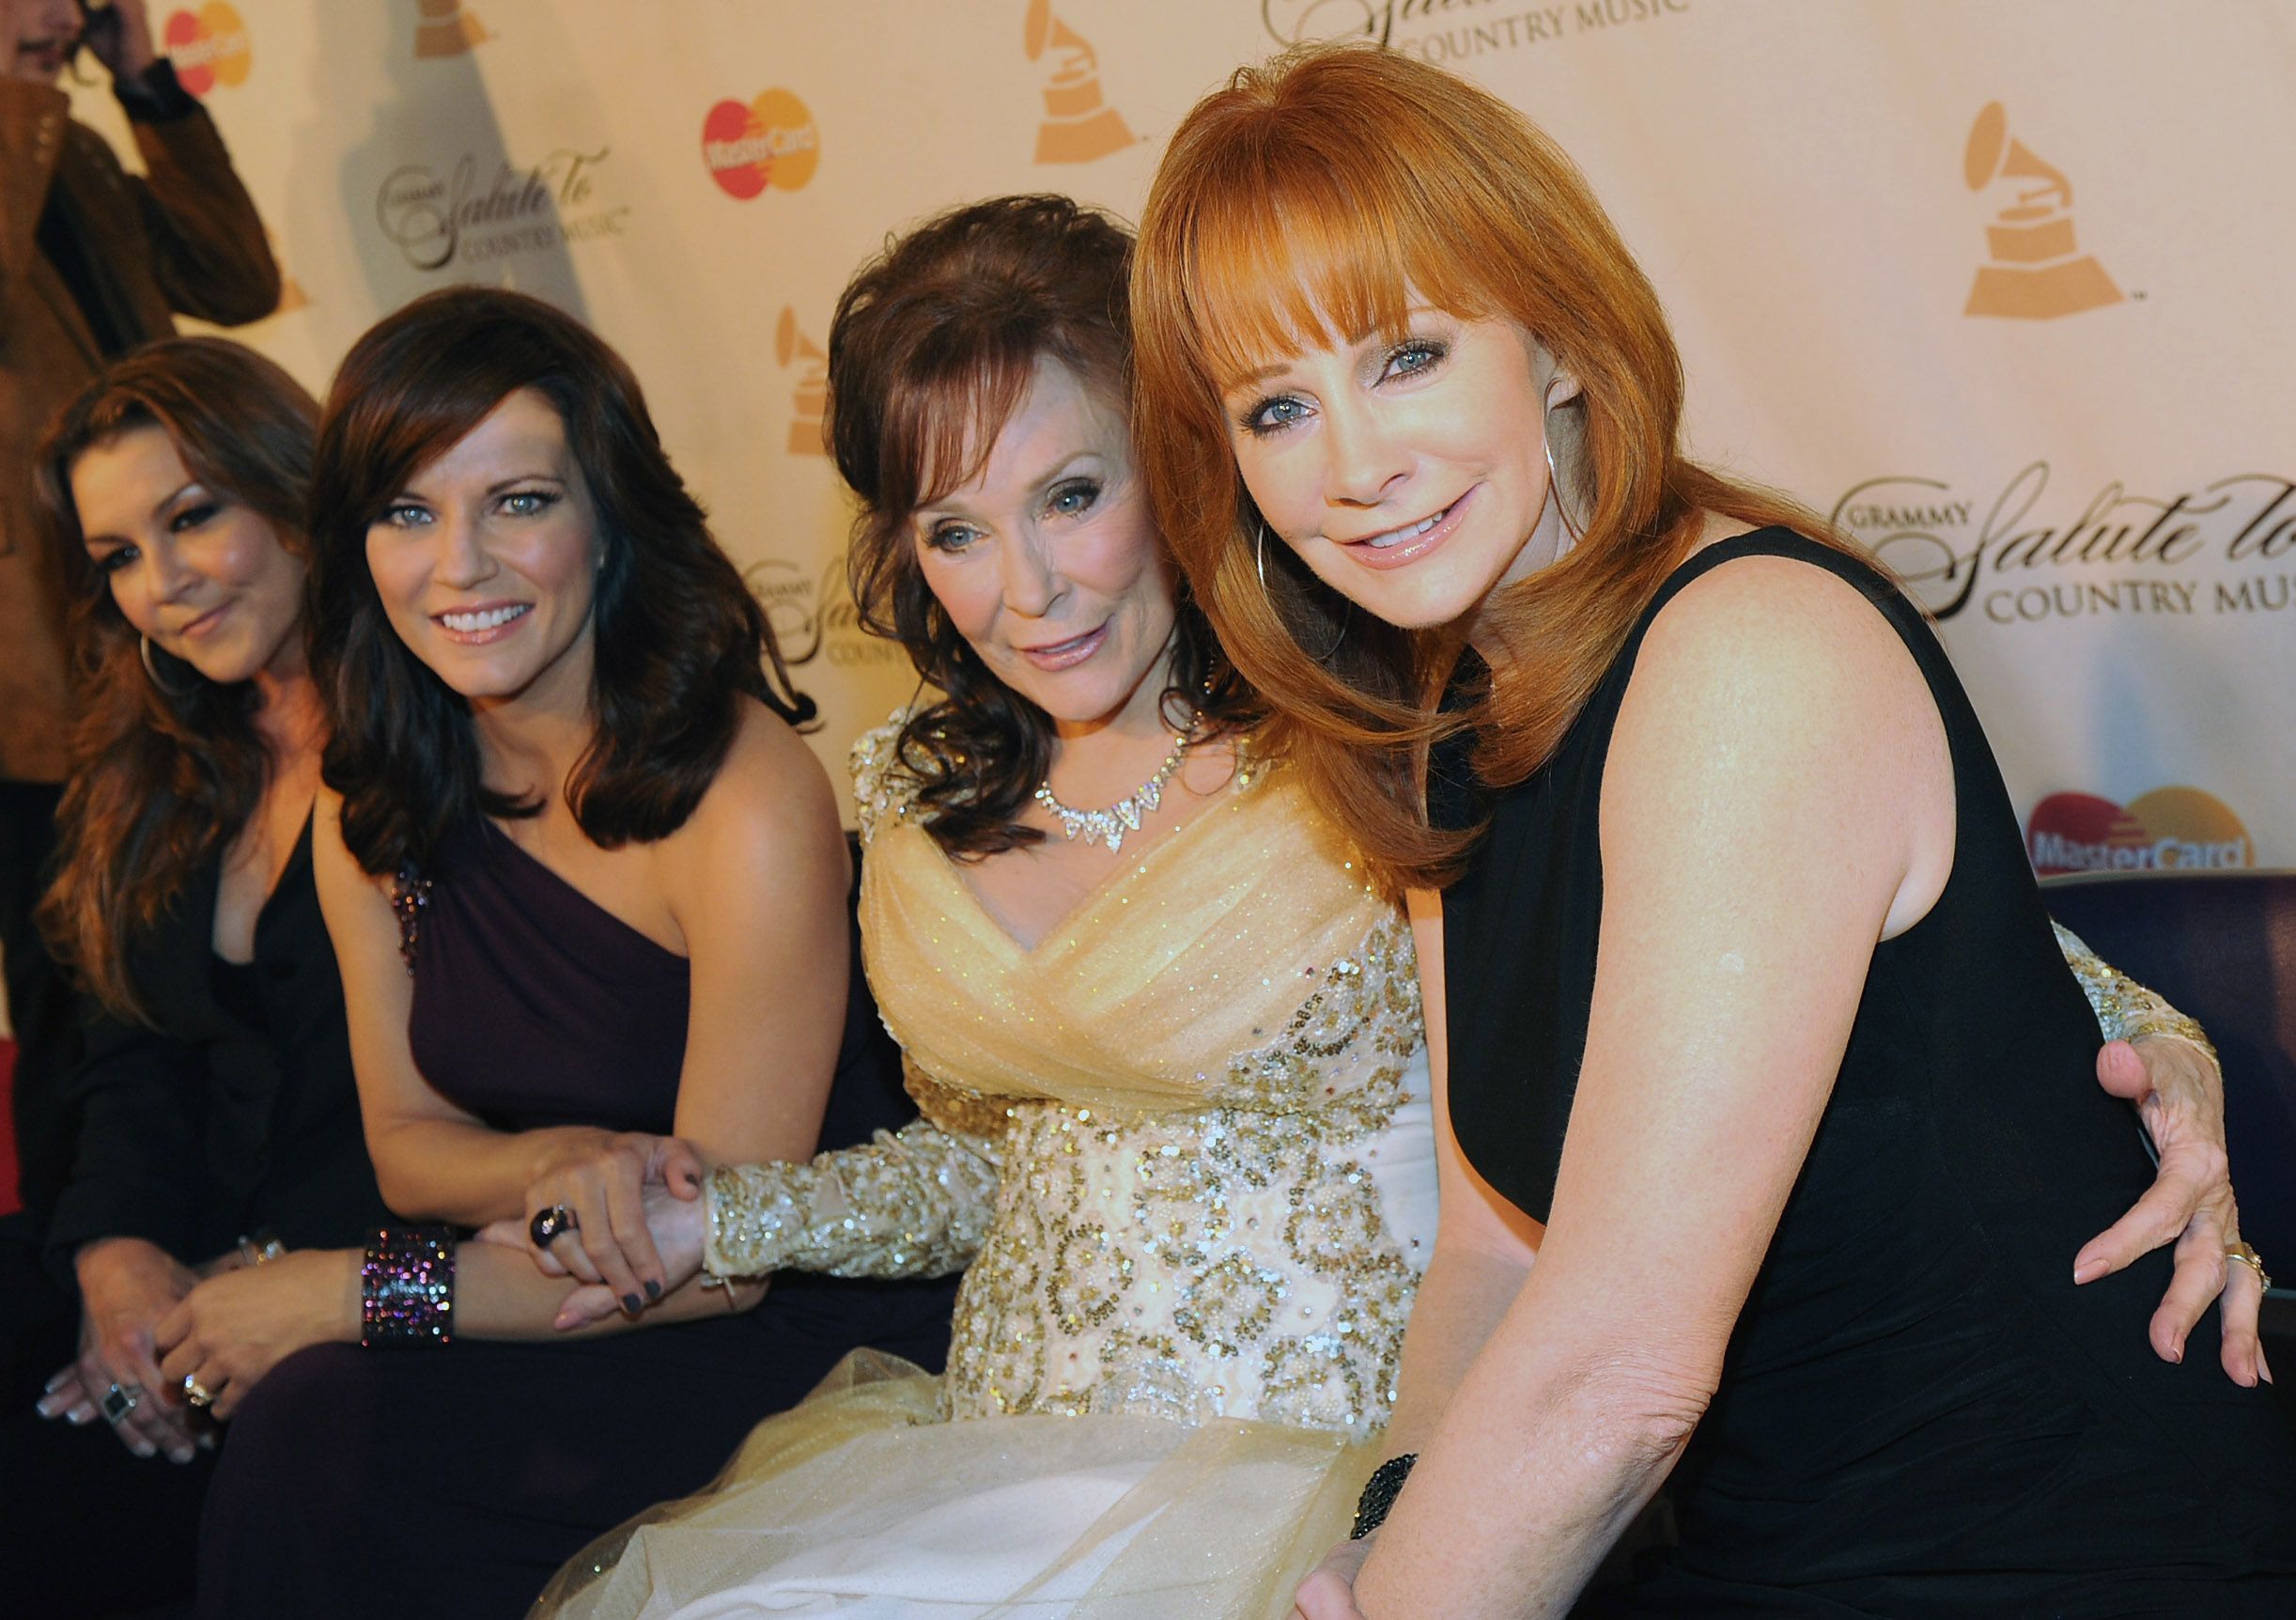 Loretta Lynn sitting with Gretchen Wilson, Martina McBride and Reba McEntire.